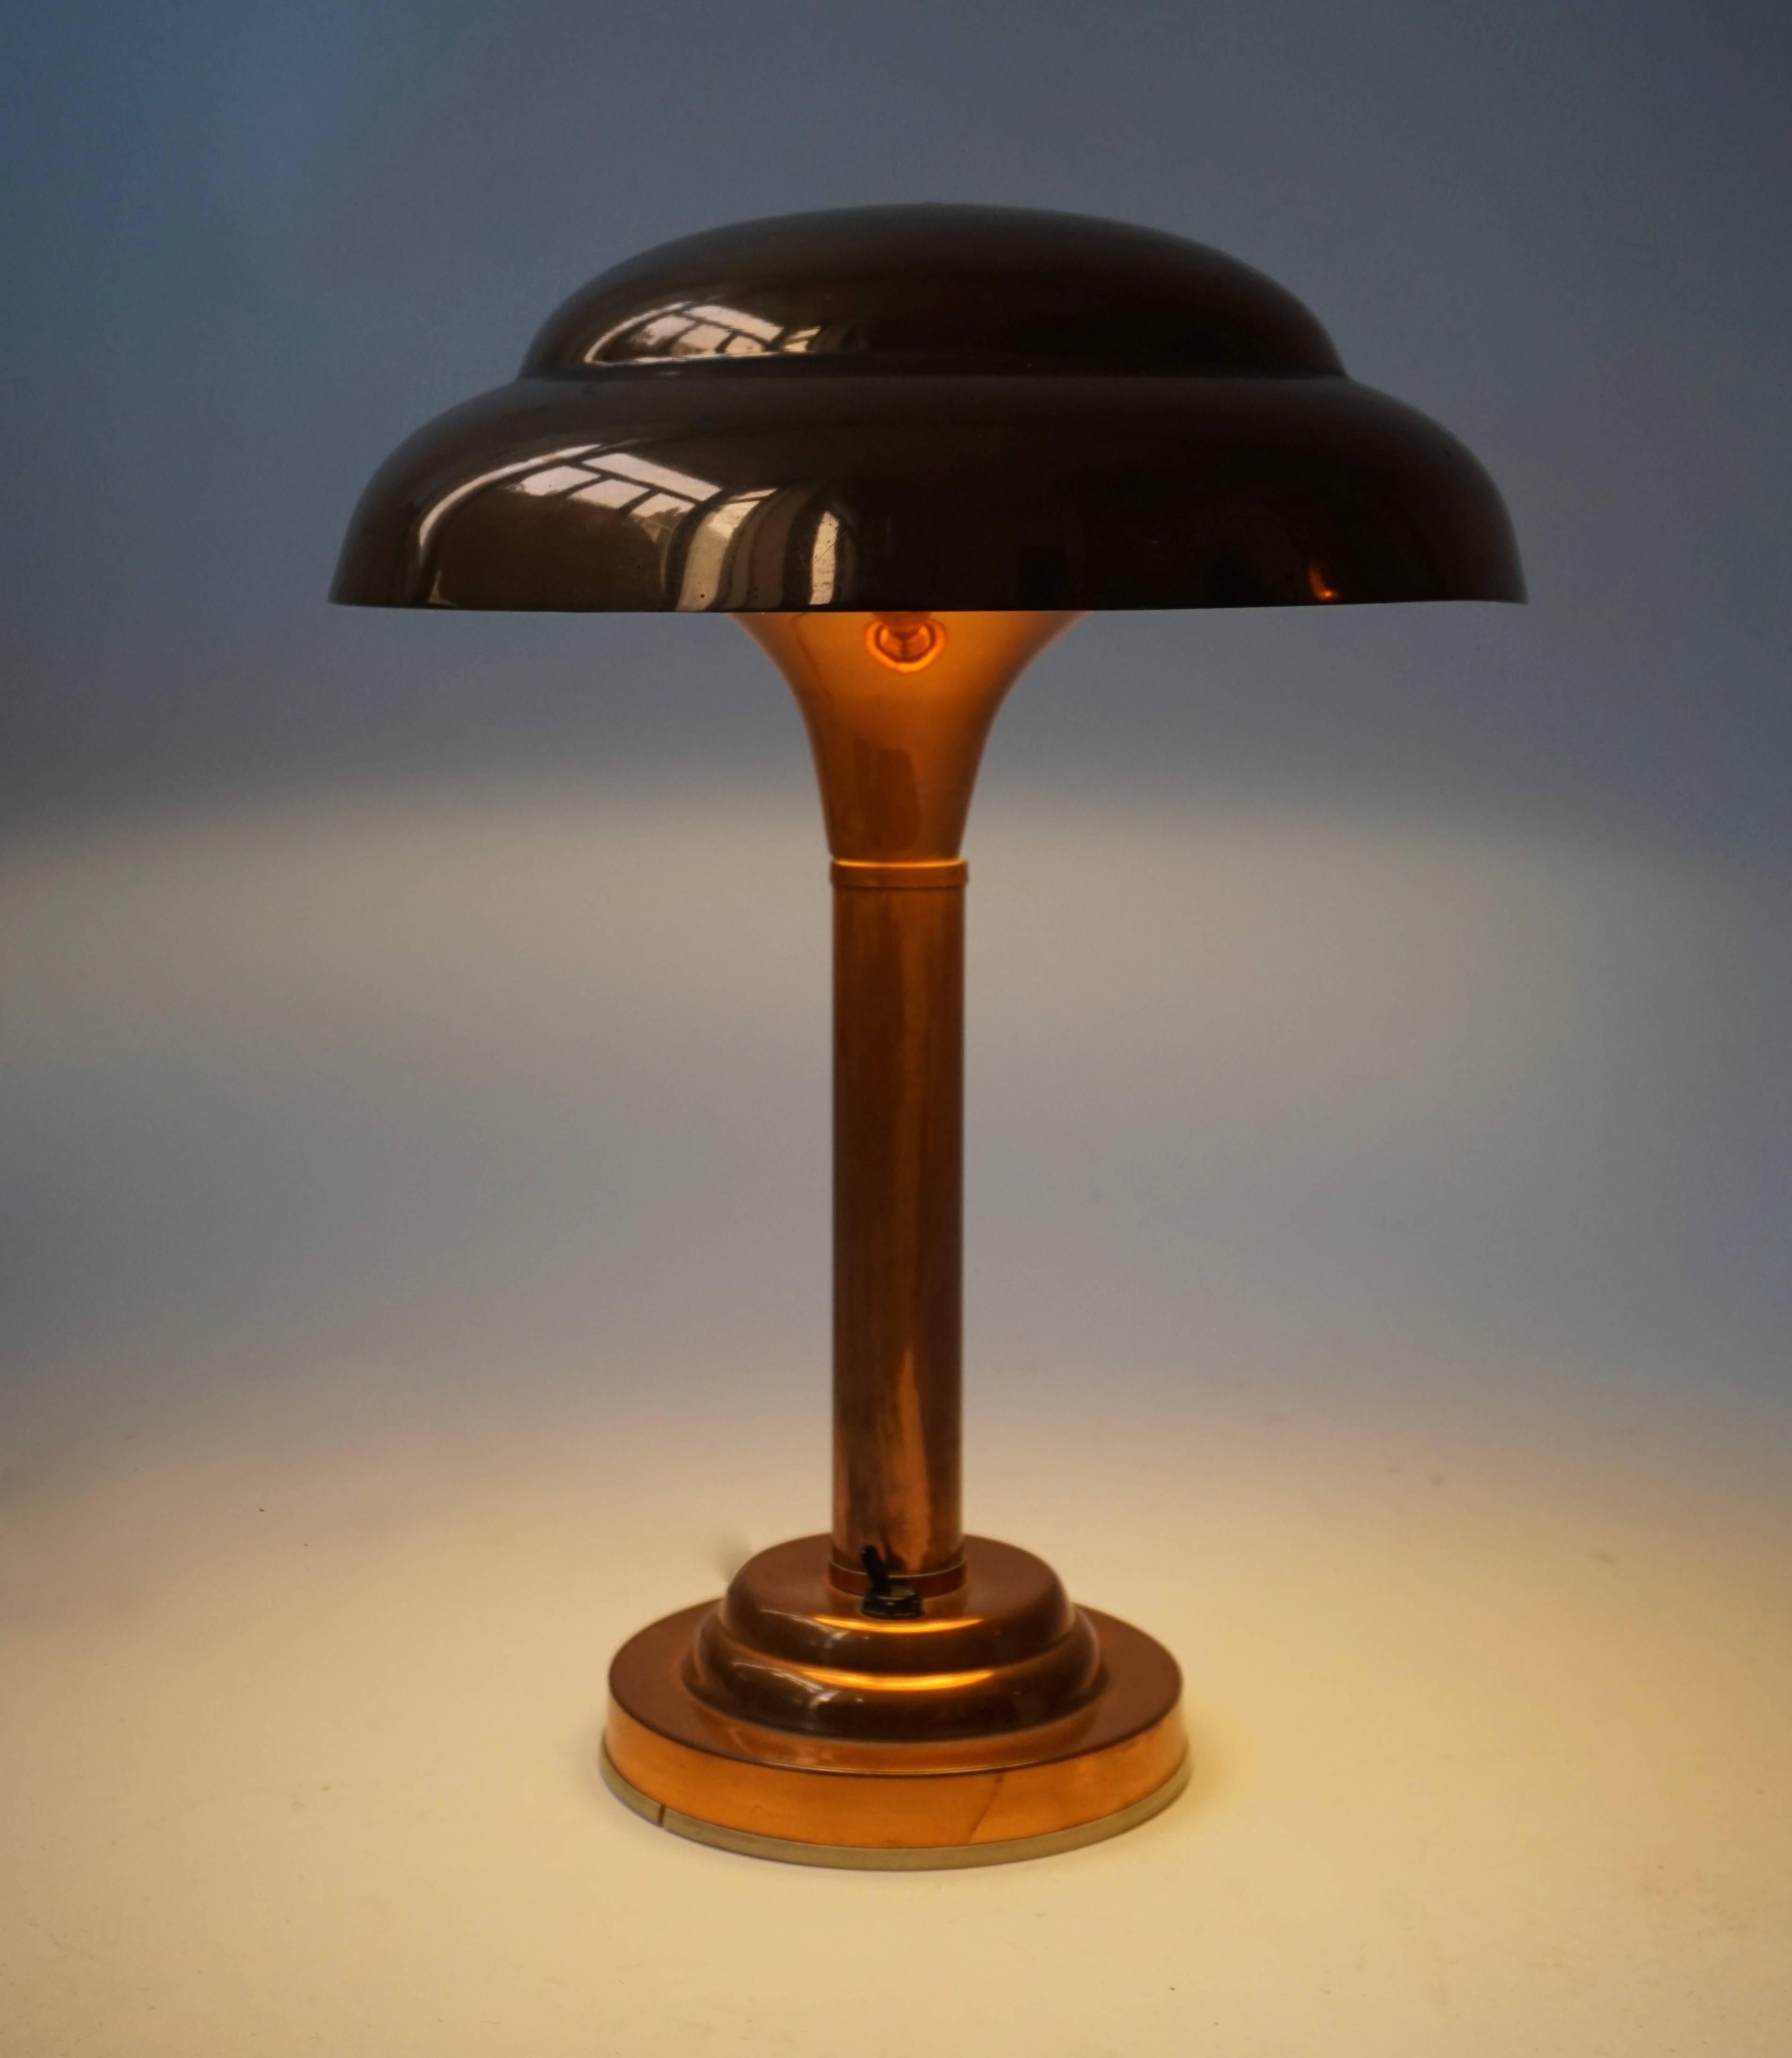 Art Deco copper table lamp.
Measures: Diameter 29 cm.
Height 39 cm.